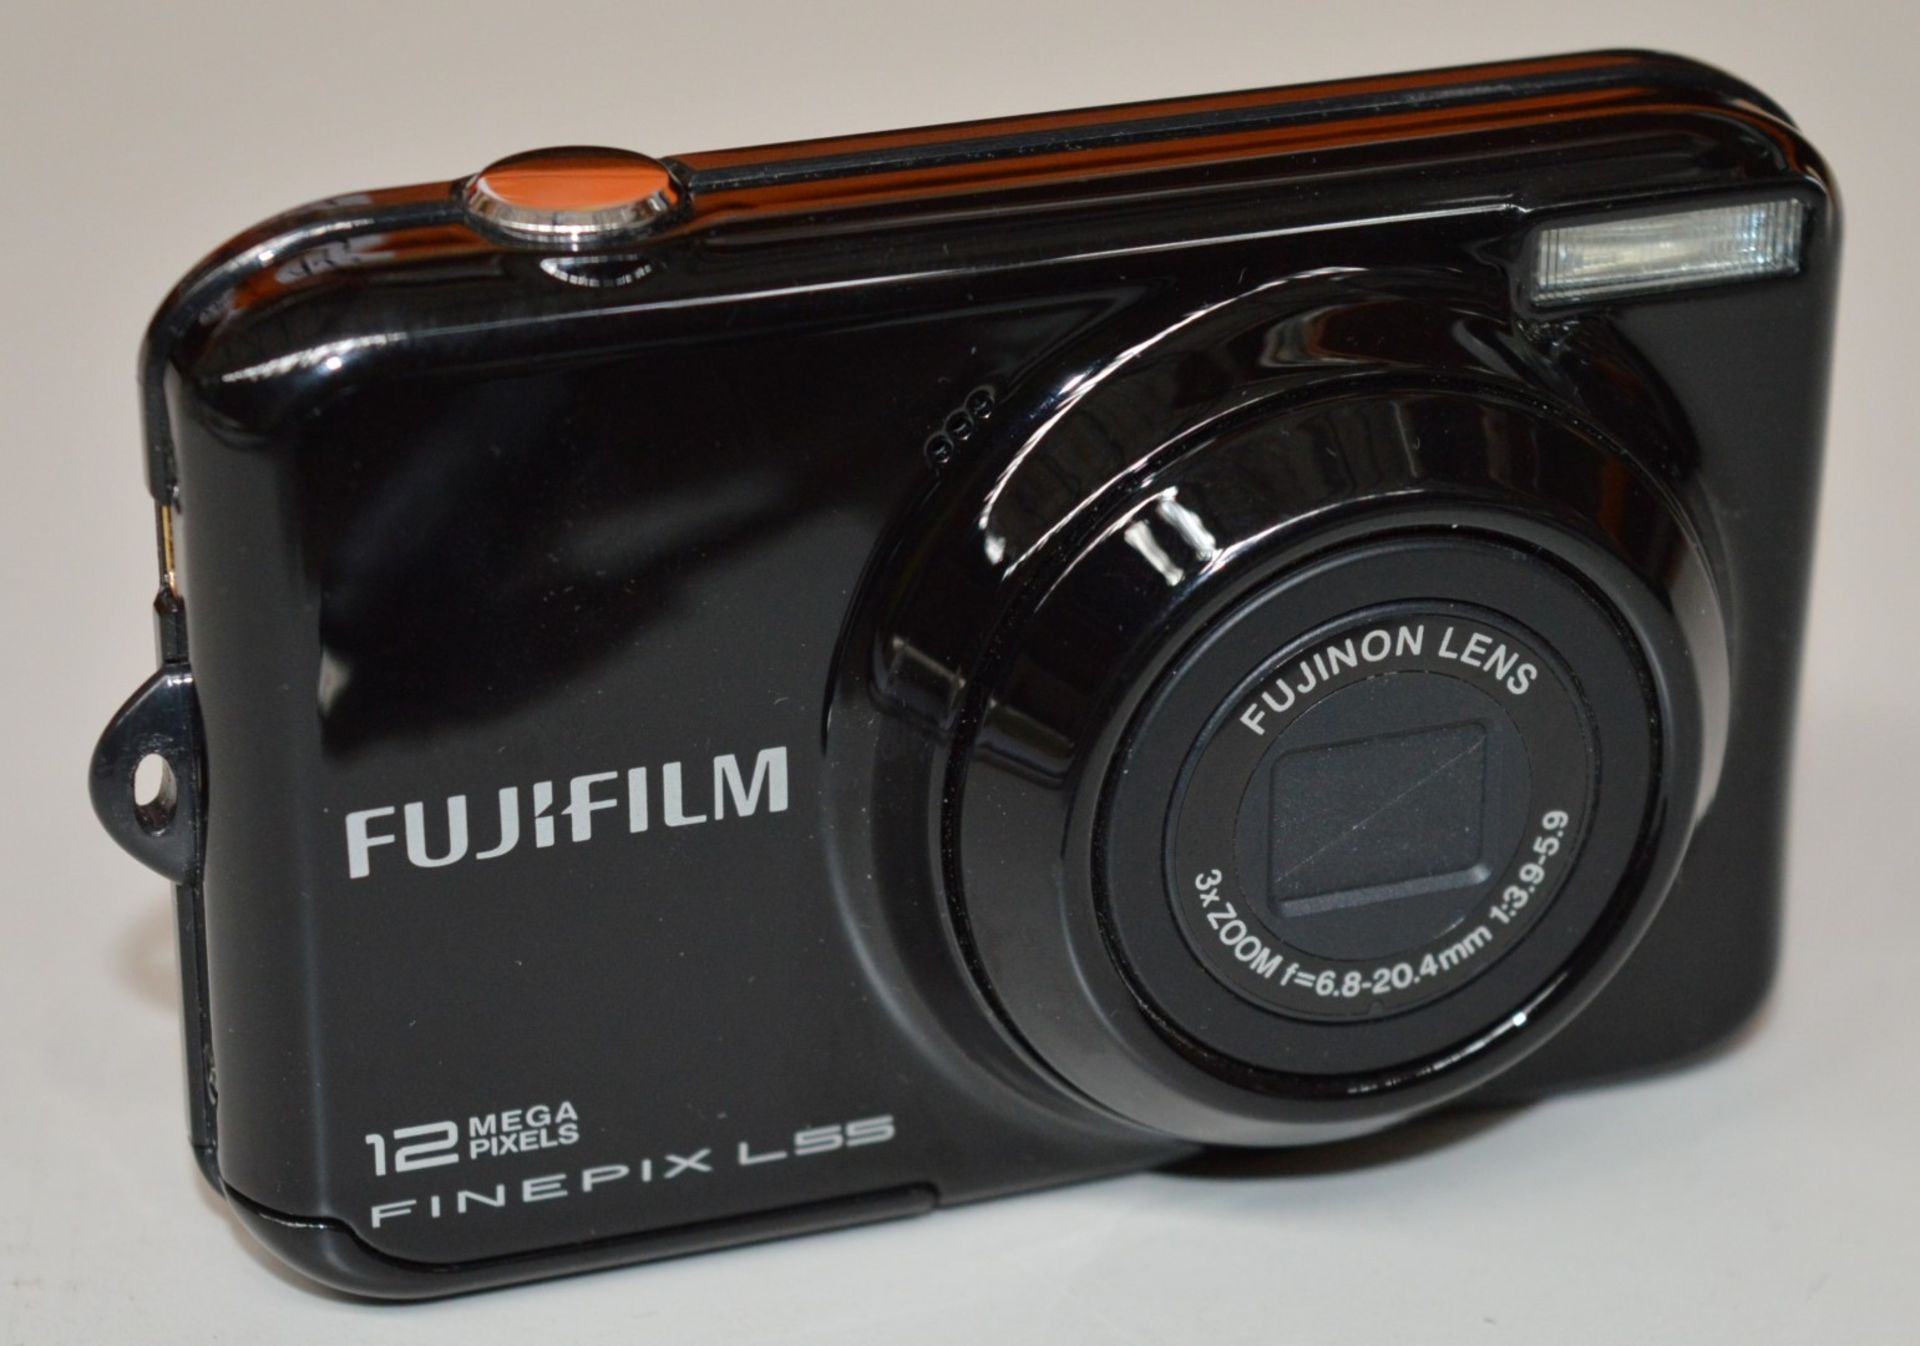 1 x Fujifilm 12 Mega Pixel Finepix L55 Digital Camera - Good Working Condition - CL300 - Includes Ch